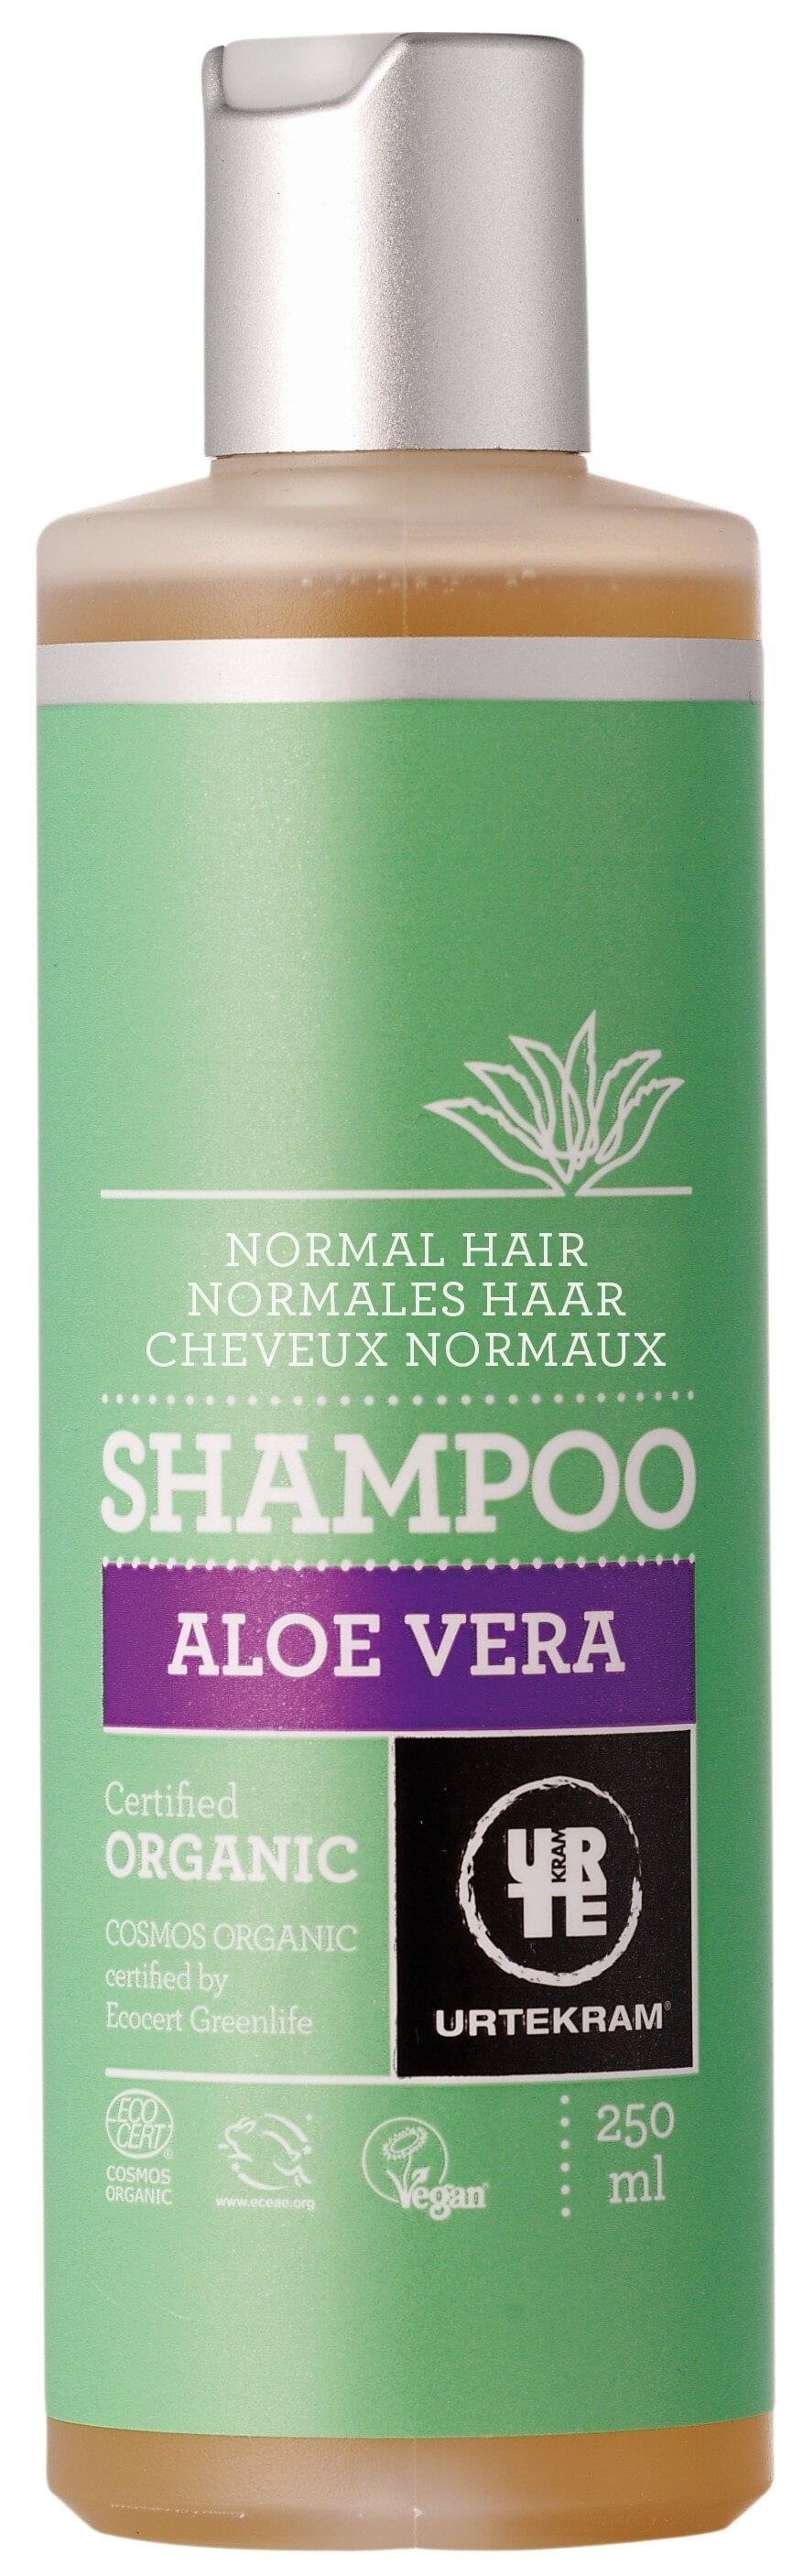 Zobrazit detail výrobku Urtekram Šampon aloe vera - normální vlasy 250 ml BIO